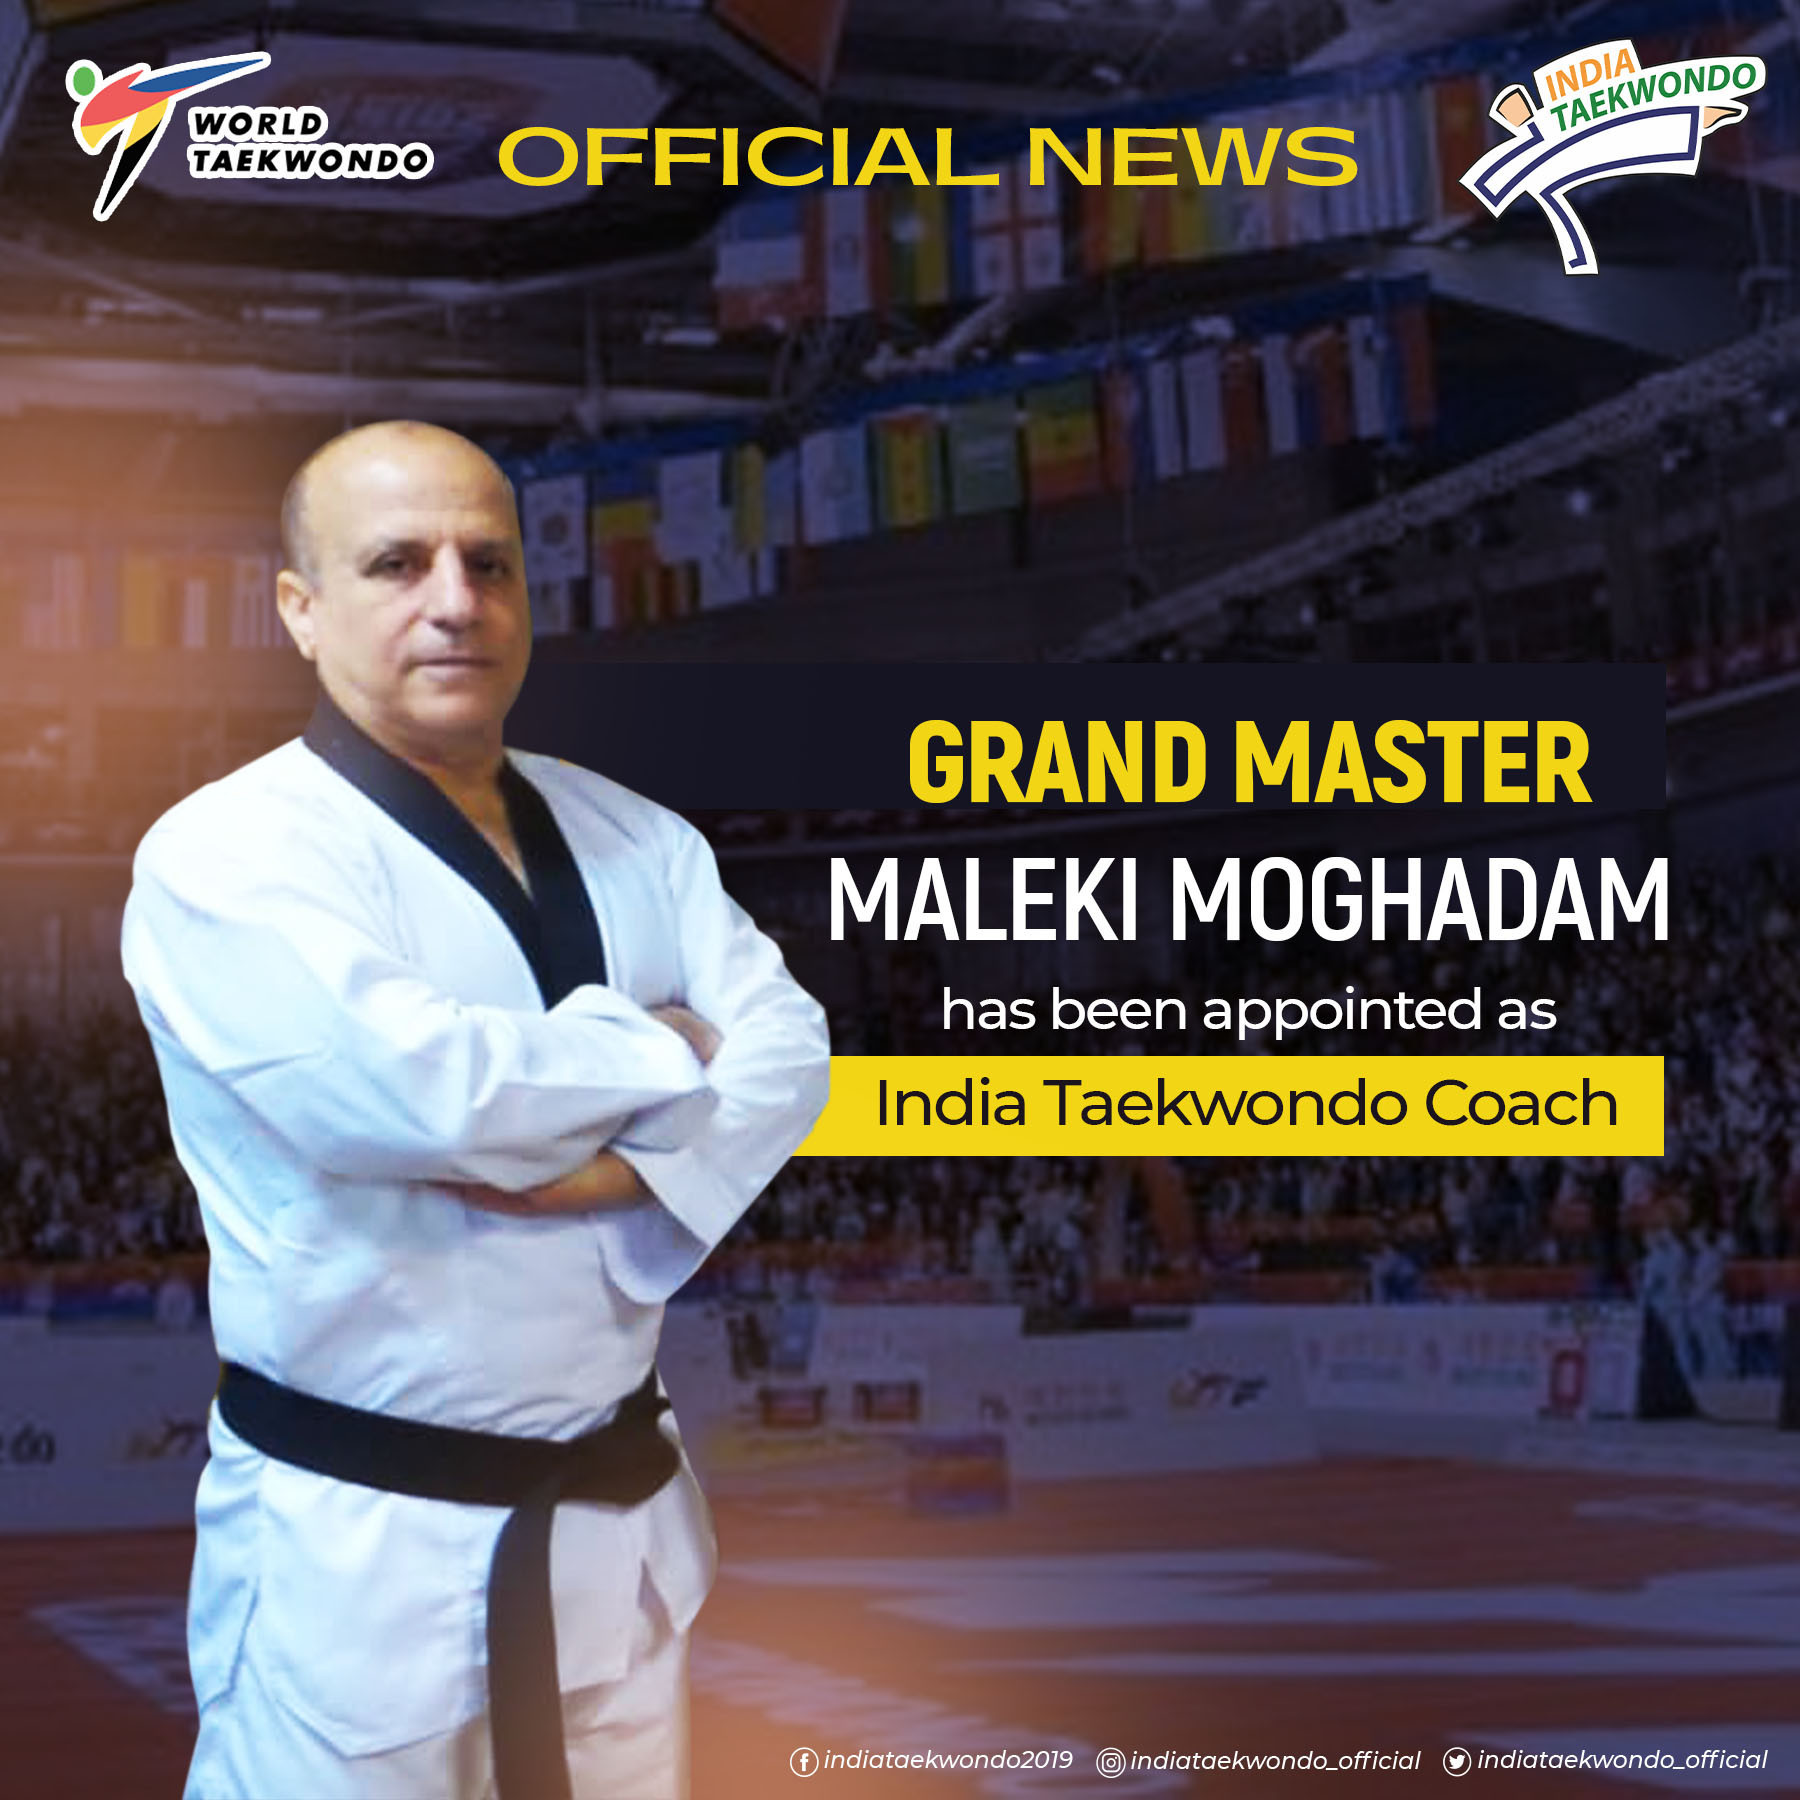 Moghadam hired as India taekwondo coach